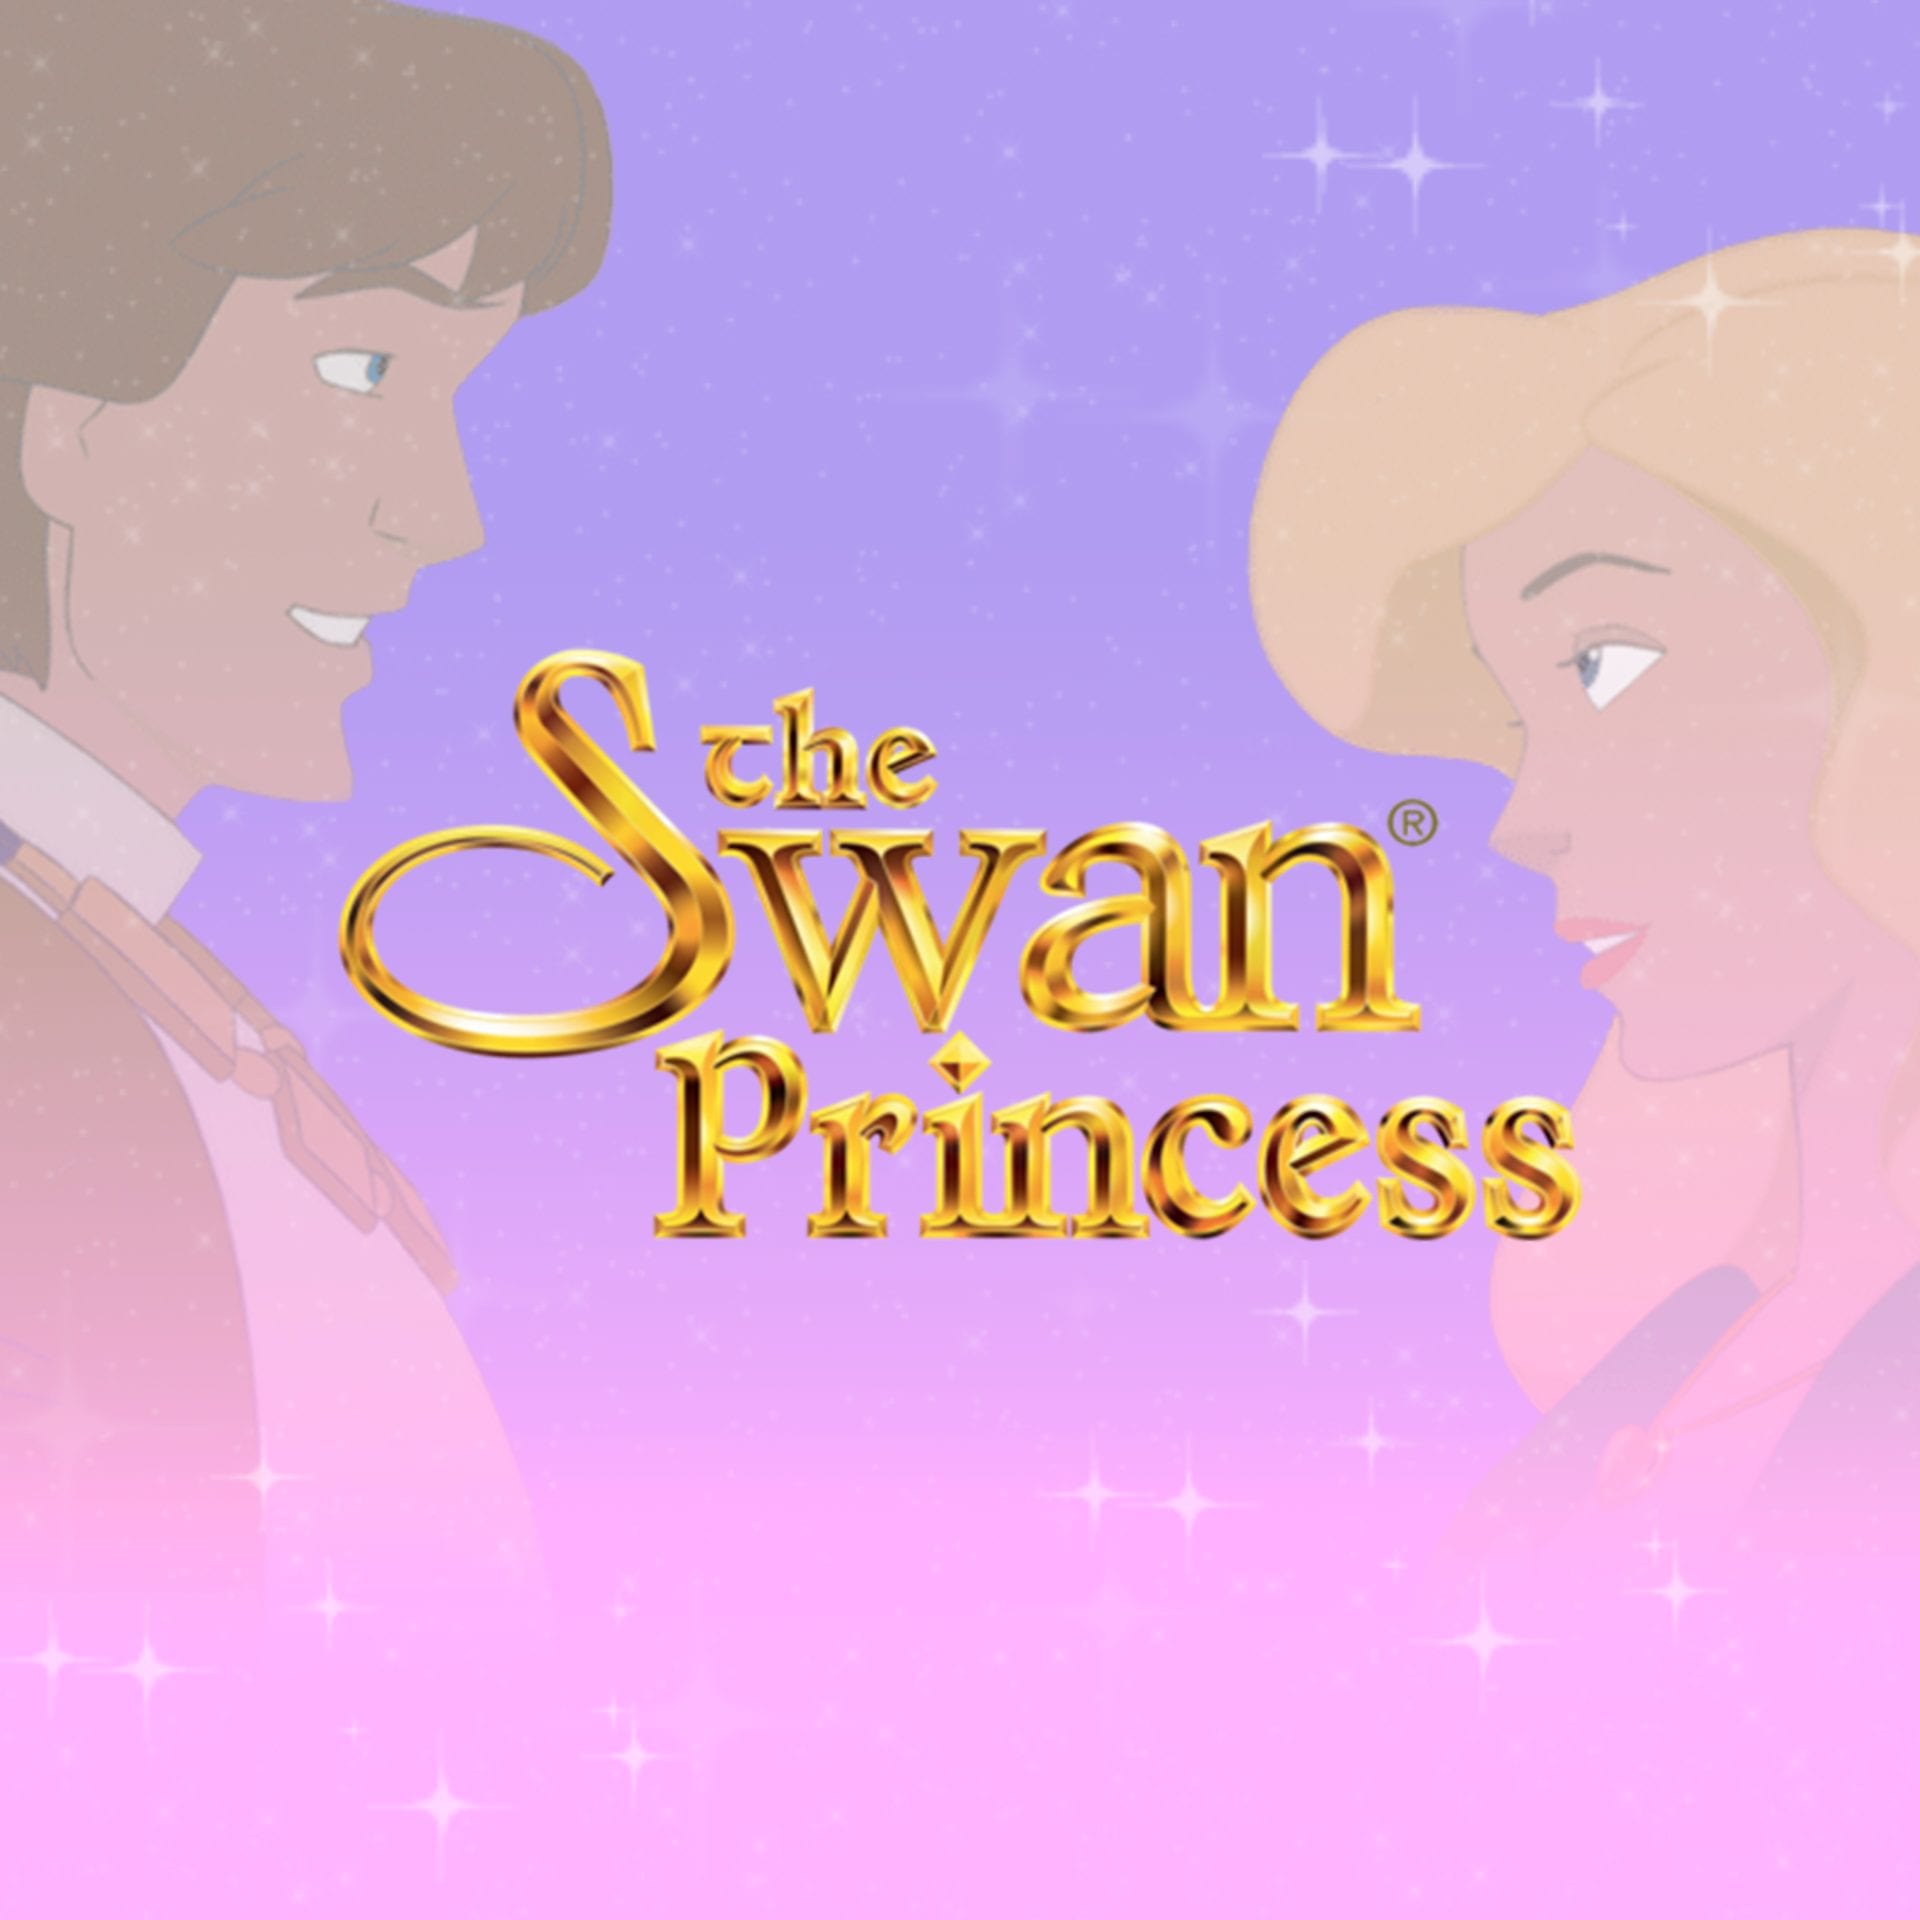 The Swan Princess logo